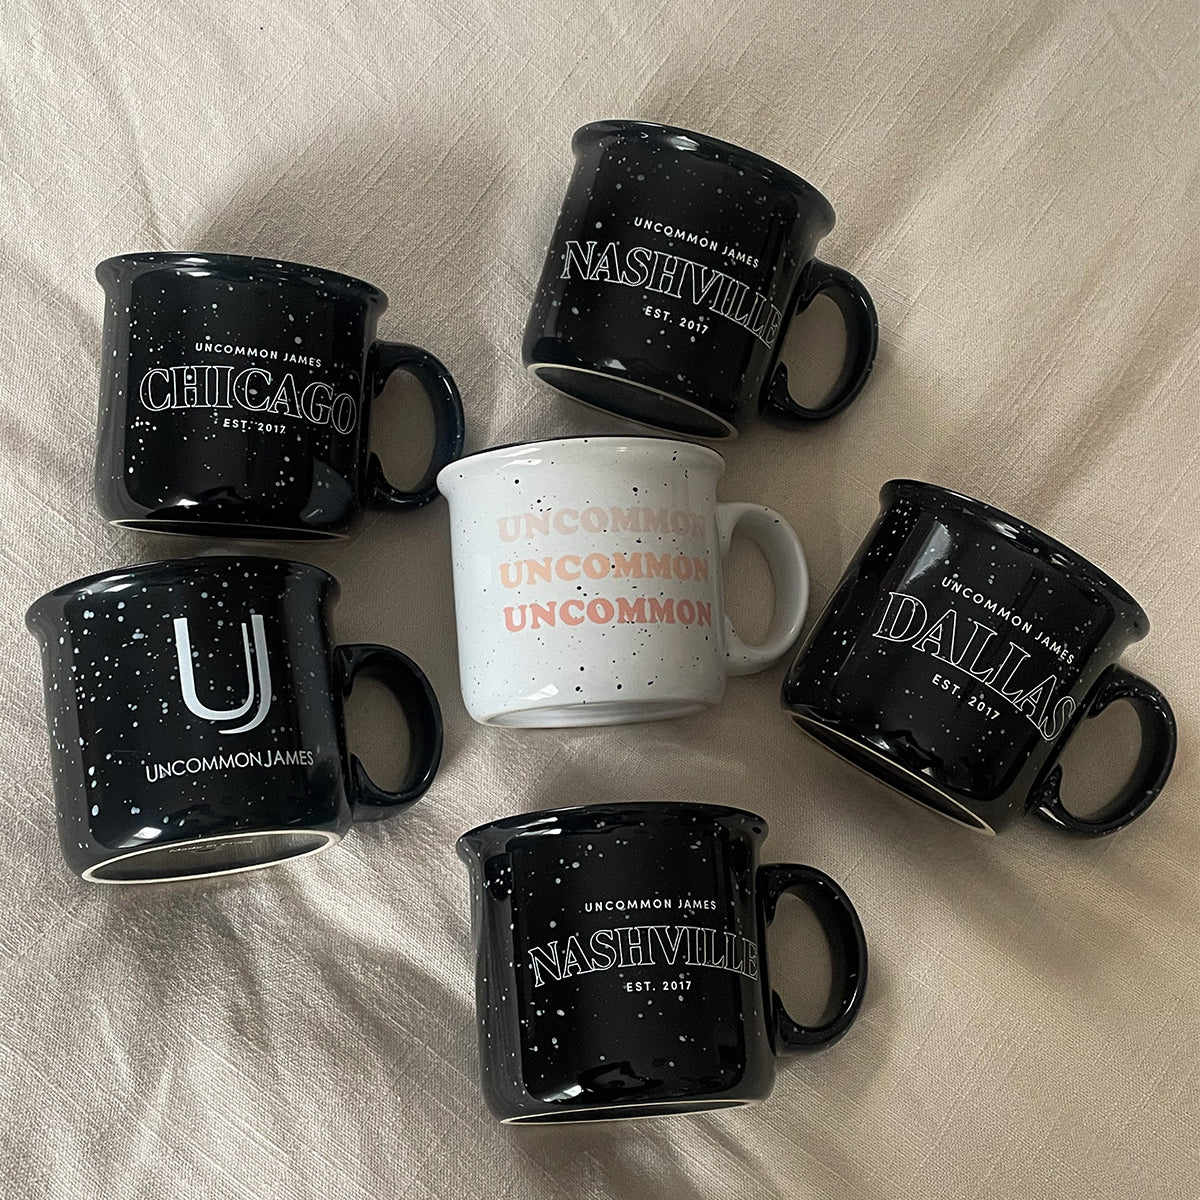 Uncommon Ombré Mug | White | Lifestyle Image 2 | Uncommon James Home